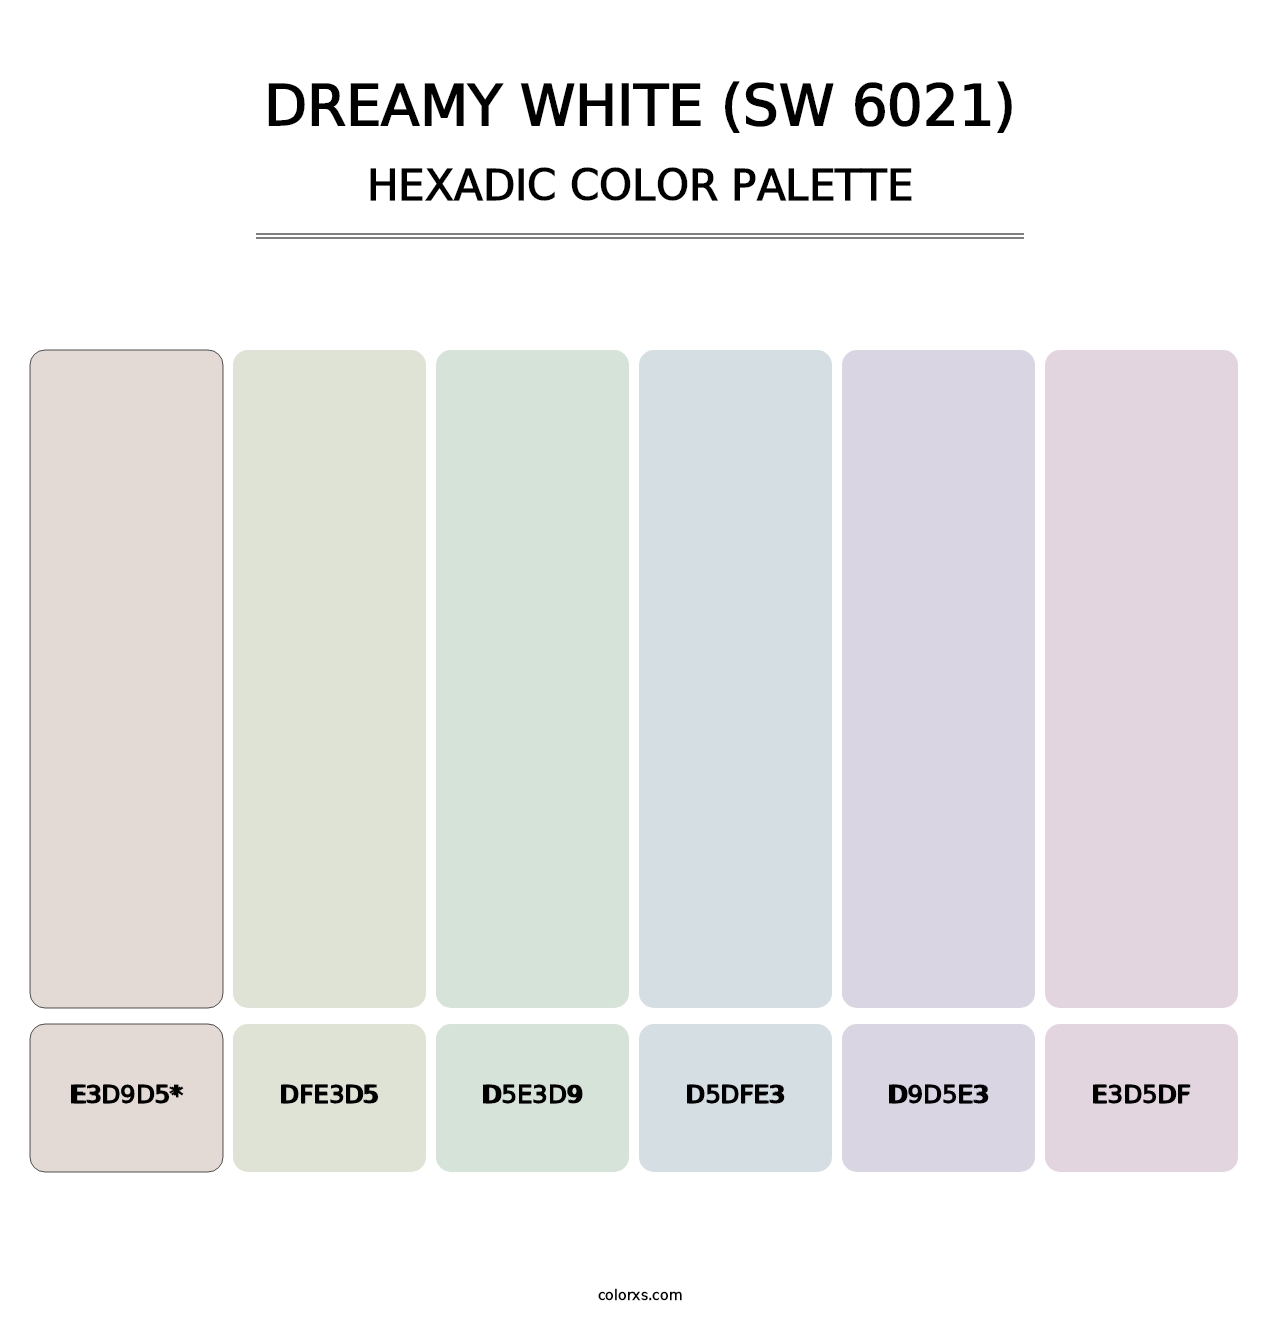 Dreamy White (SW 6021) - Hexadic Color Palette